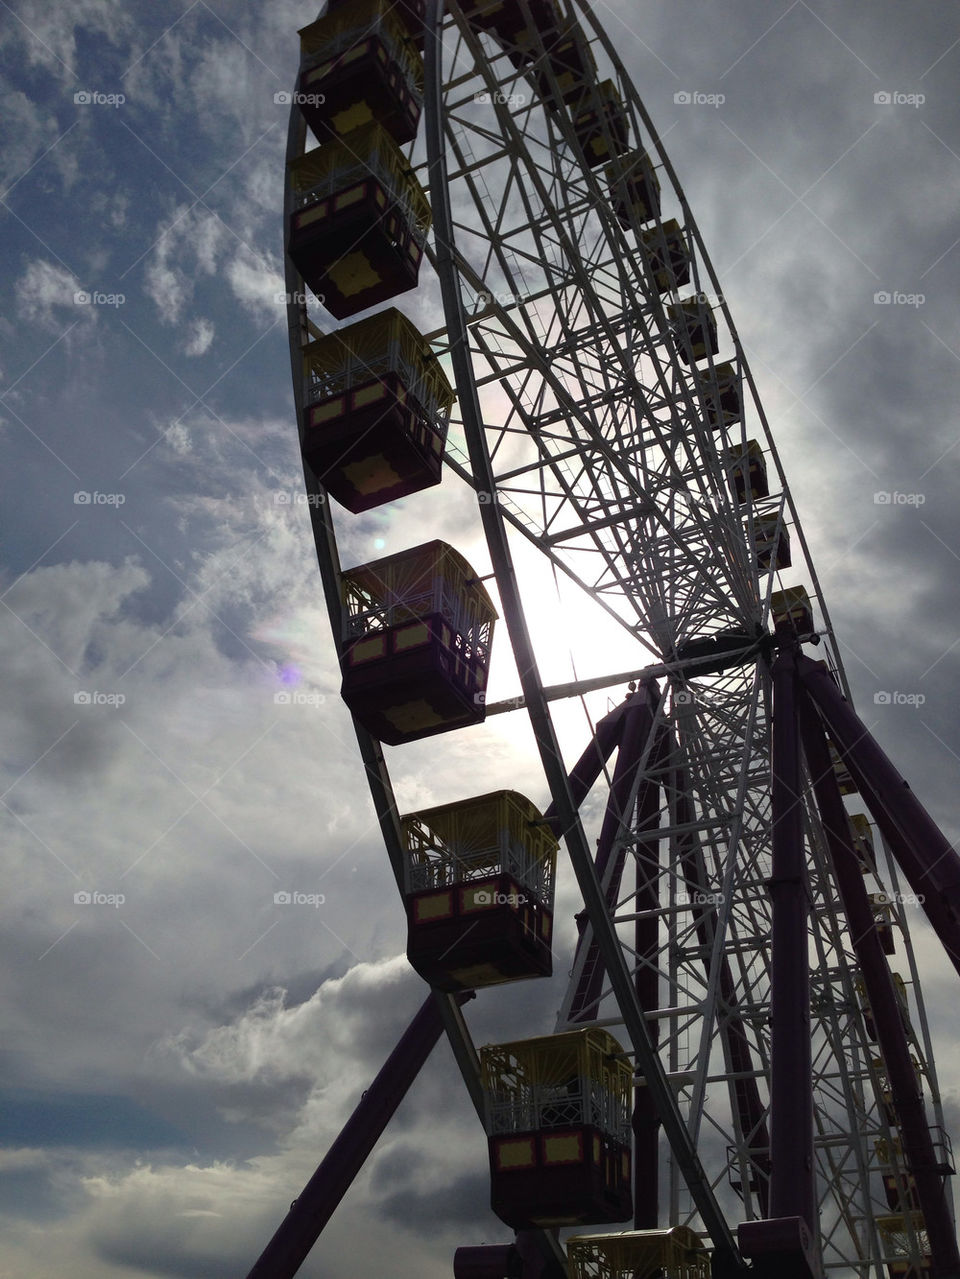 The Royal Melbourne Show's Ferris Wheel.